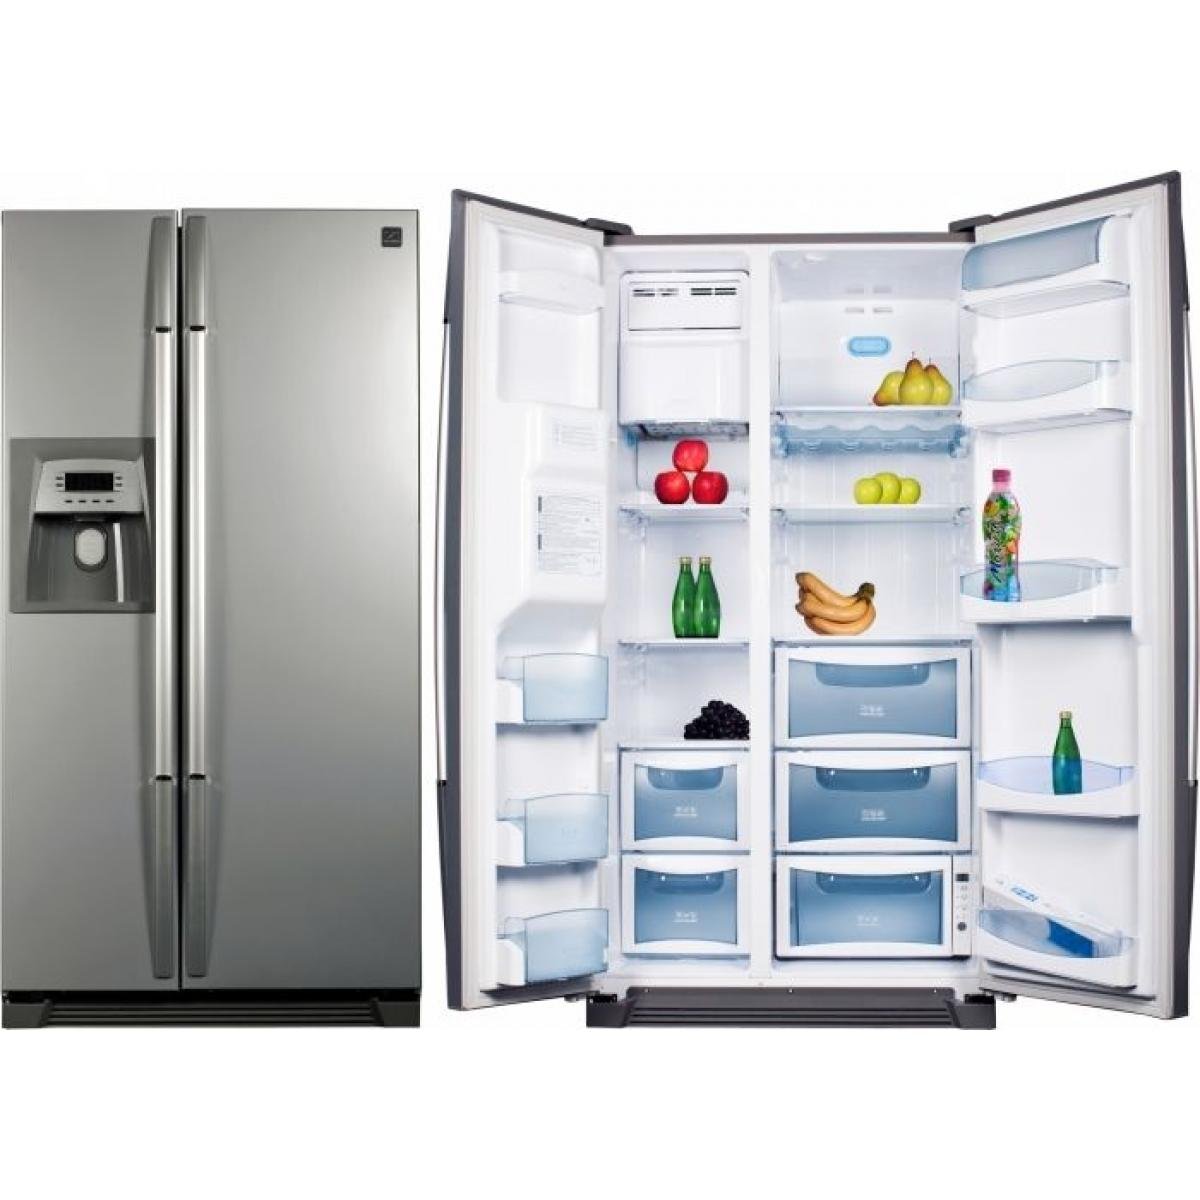 Купить холодильник дэу. Дэу холодильник двухдверный ноу Фрост. Холодильник Daewoo Electronics FRS-6311 SFG. Холодильник Daewoo Electronics двухдверный. Холодильник Бирюса двухстворчатый.